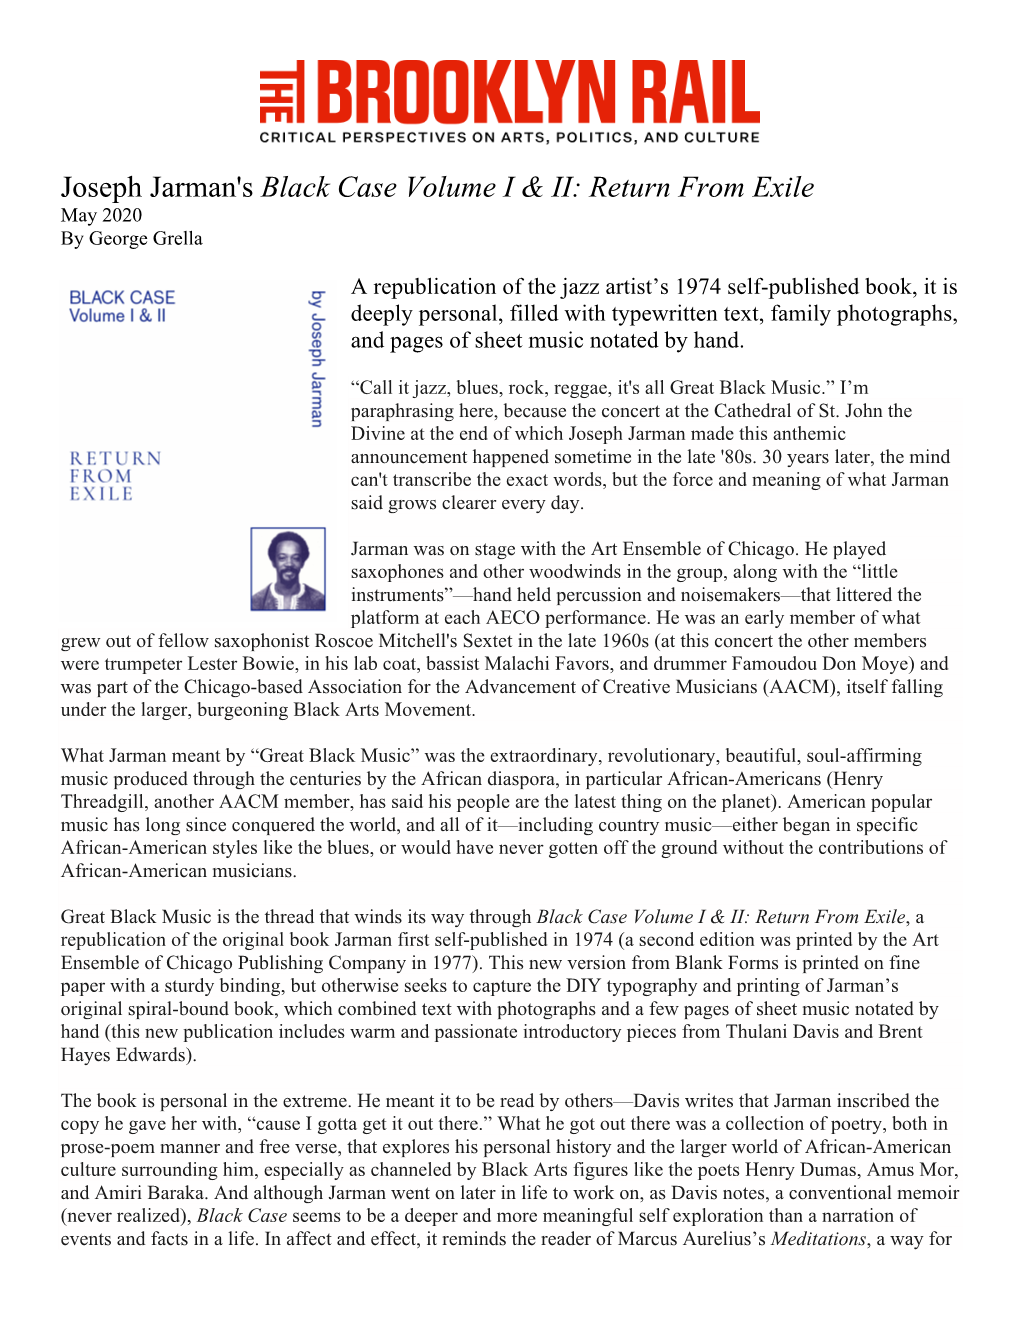 Joseph Jarman's Black Case Volume I & II: Return from Exile